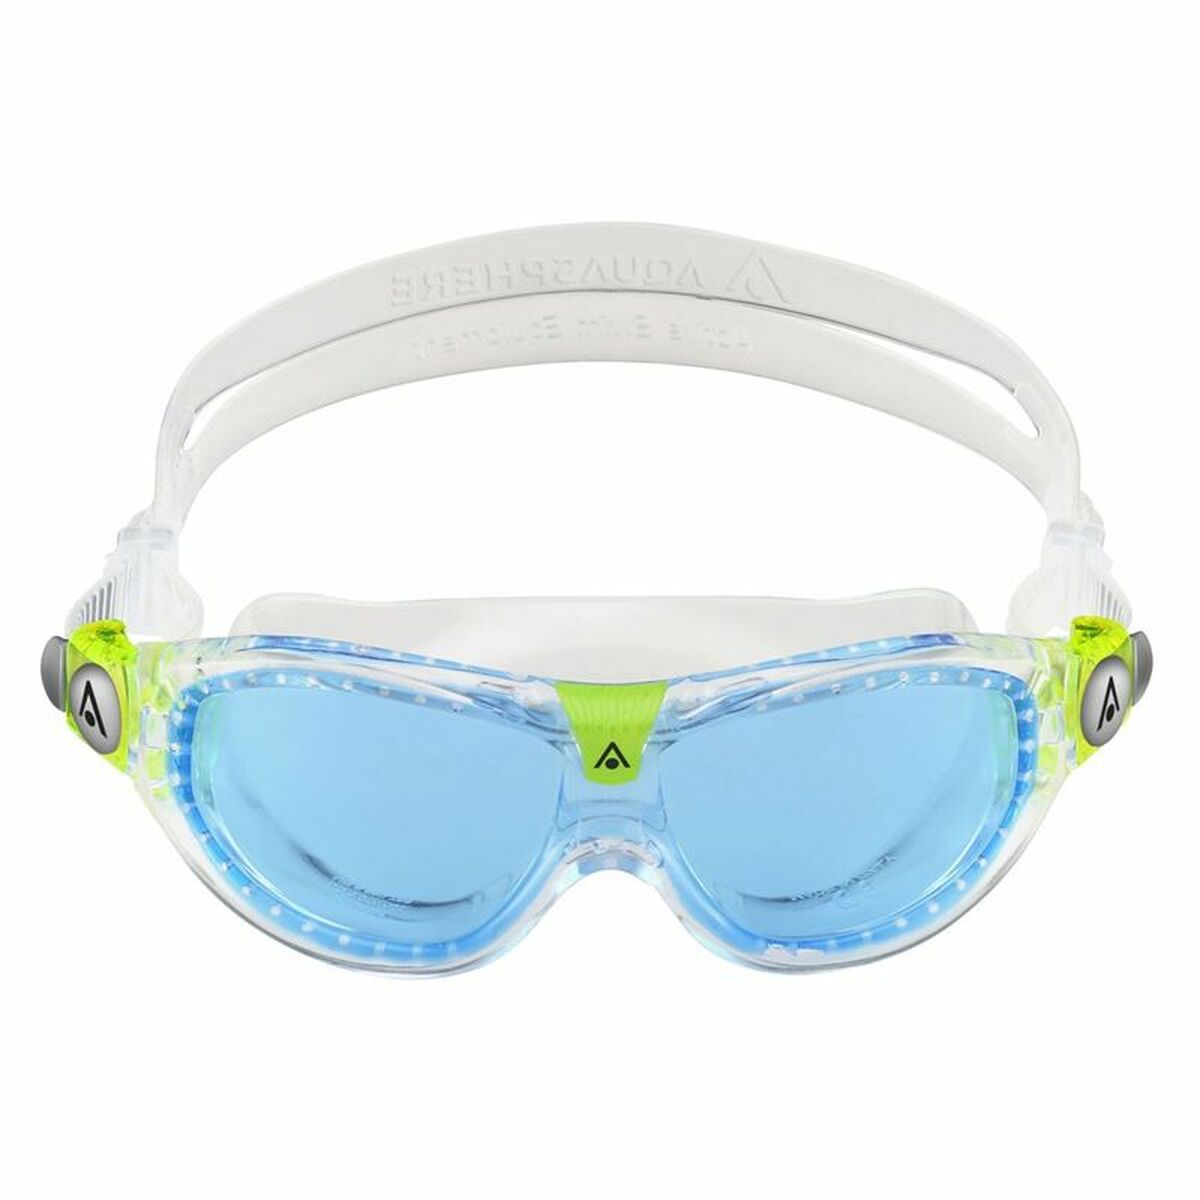 Swimming Goggles Aqua Sphere White Boys